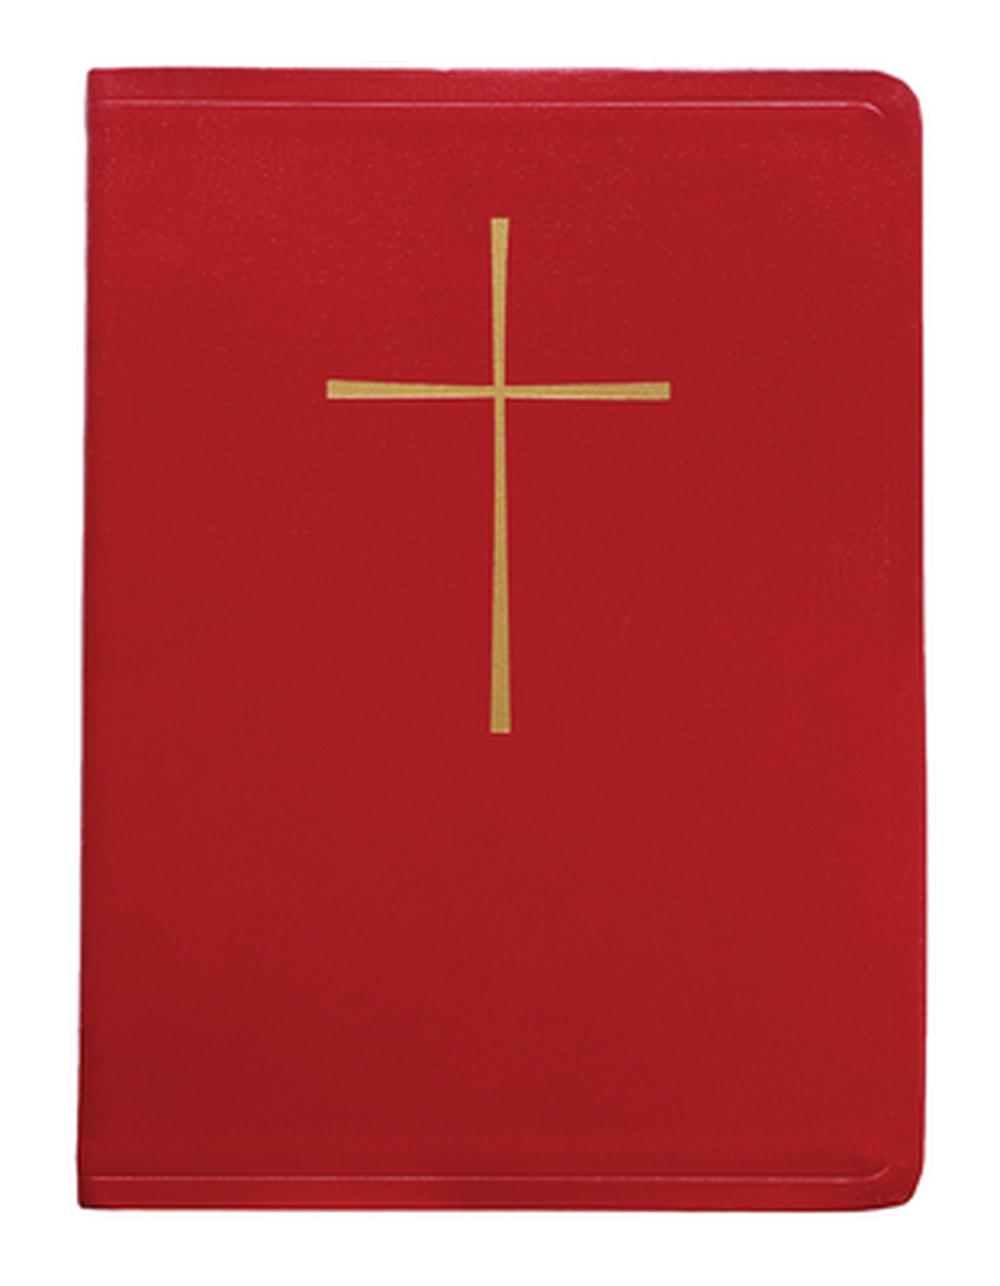 prayer manual red book pdf